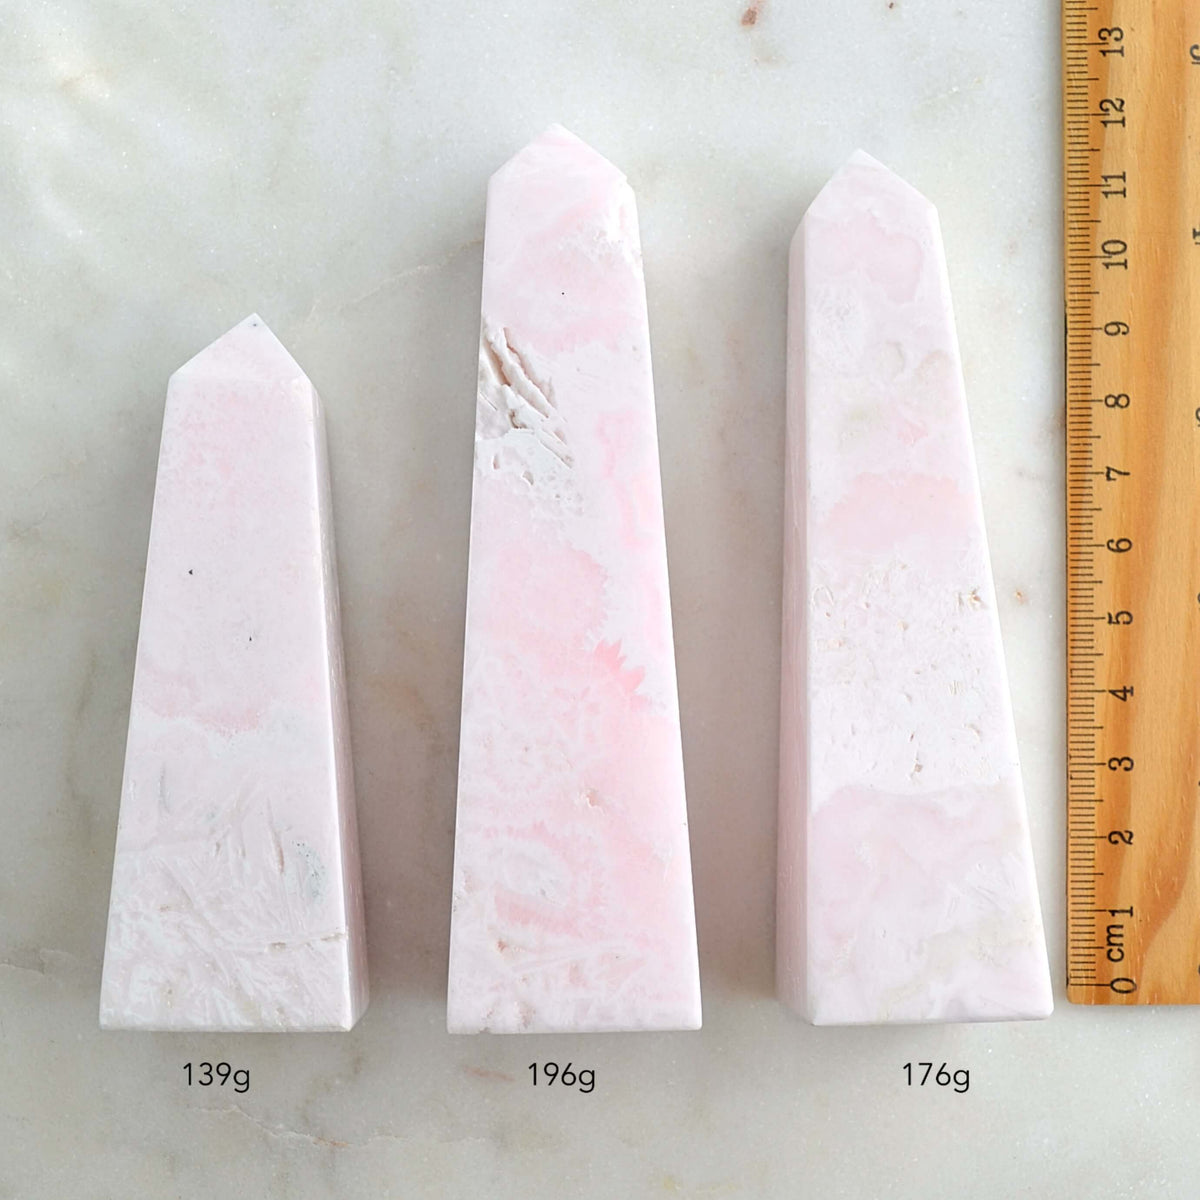 Mangano pink calcite obelisk towers